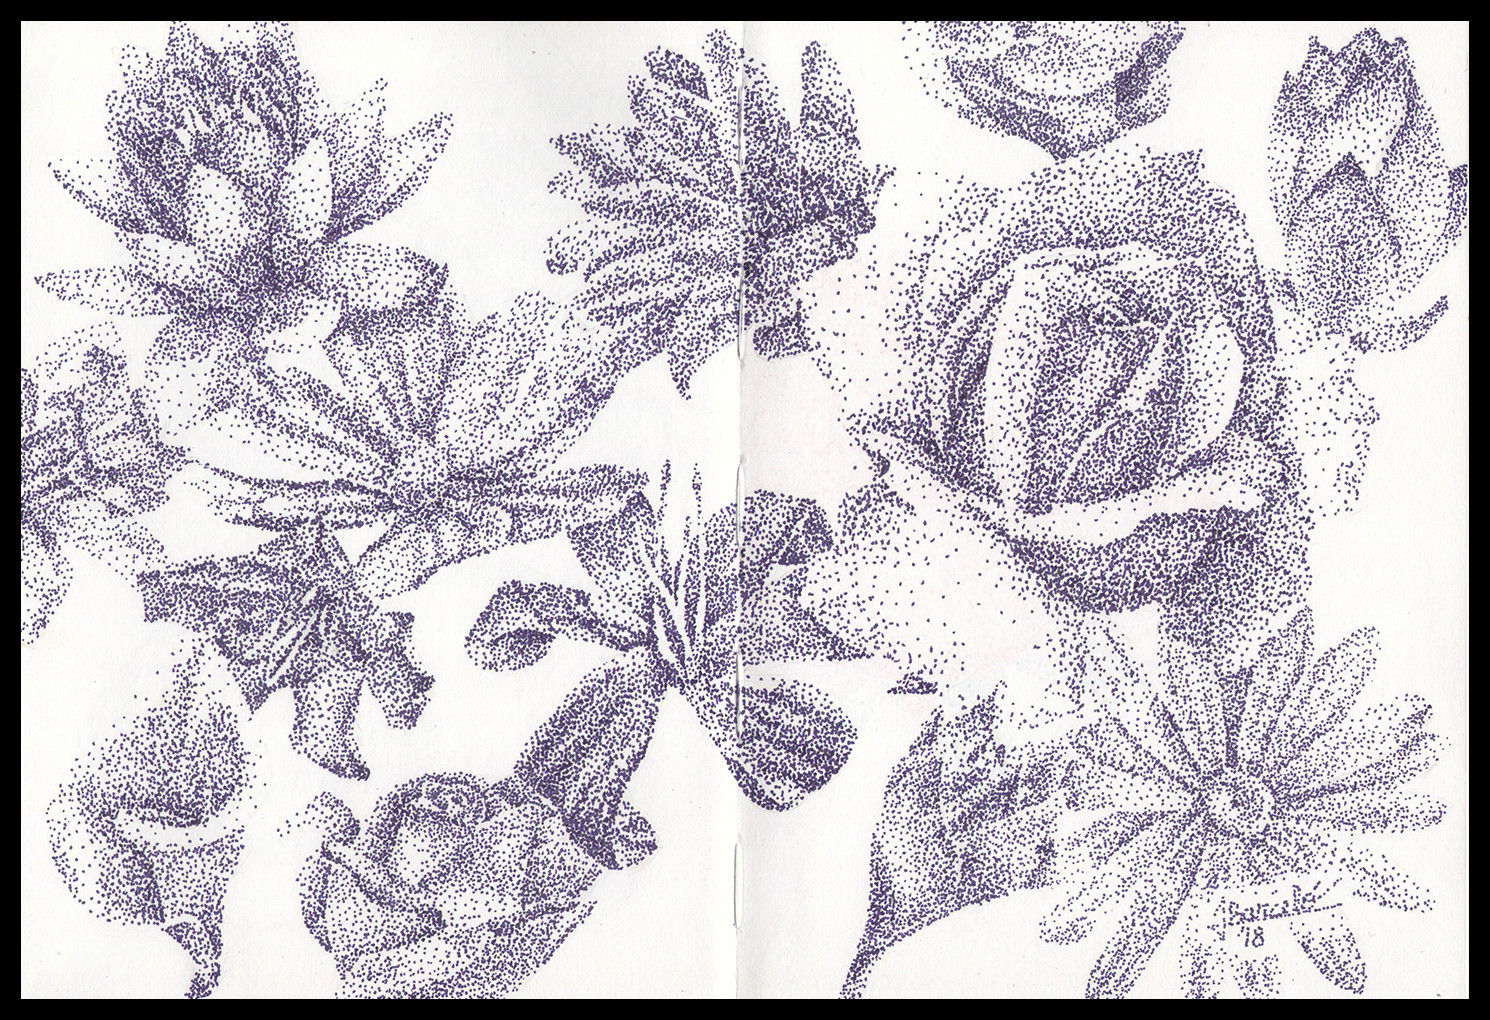 Flower study using pointillism.